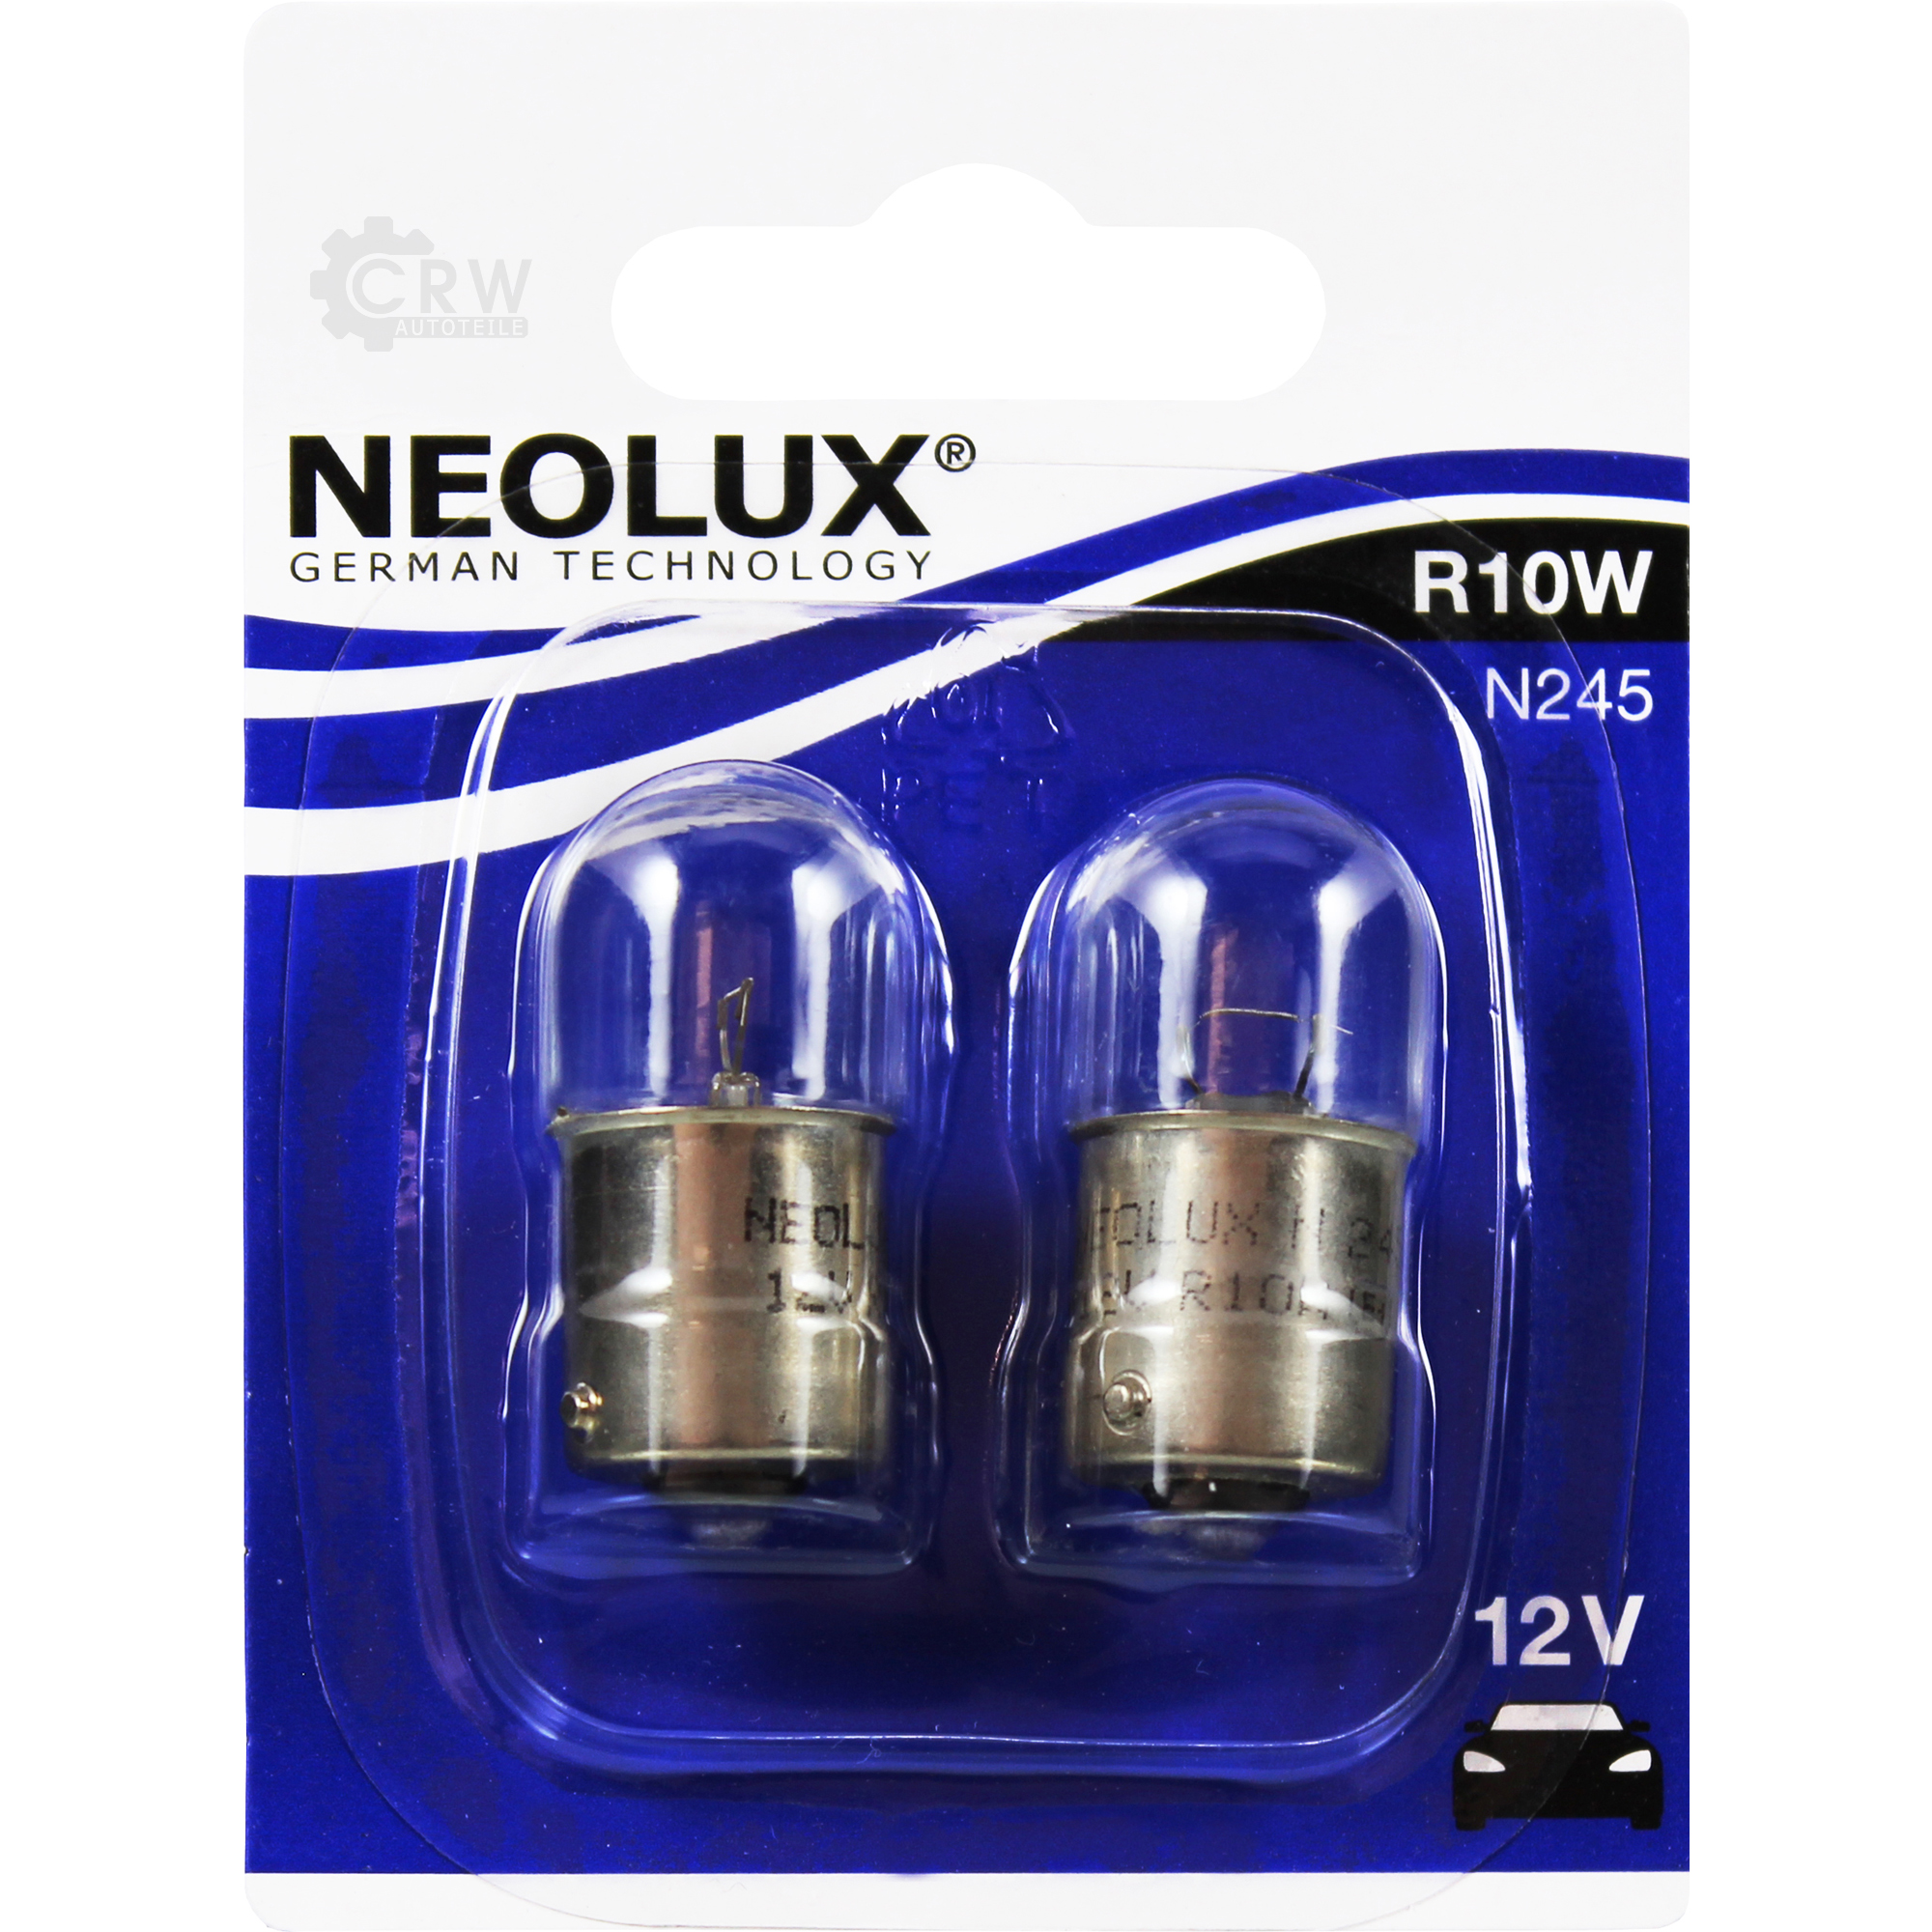 NEOLUX Standard R10W Sockel BA15s 12V Signalbeleuchtung und Innenbeleuchtung